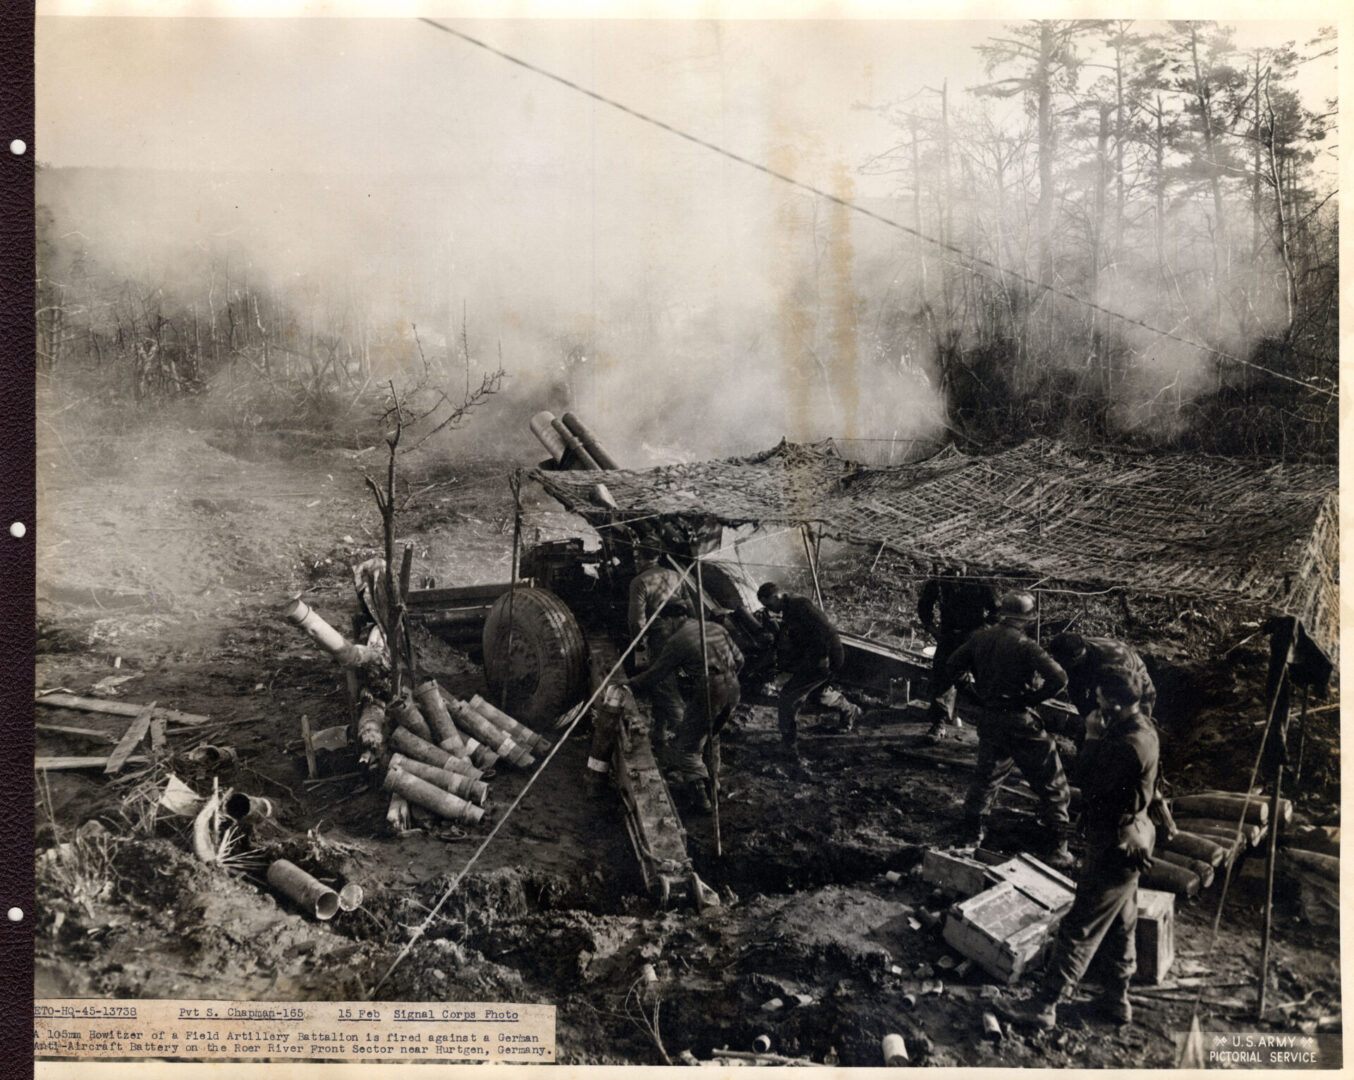 Howitzer gun in action during the war